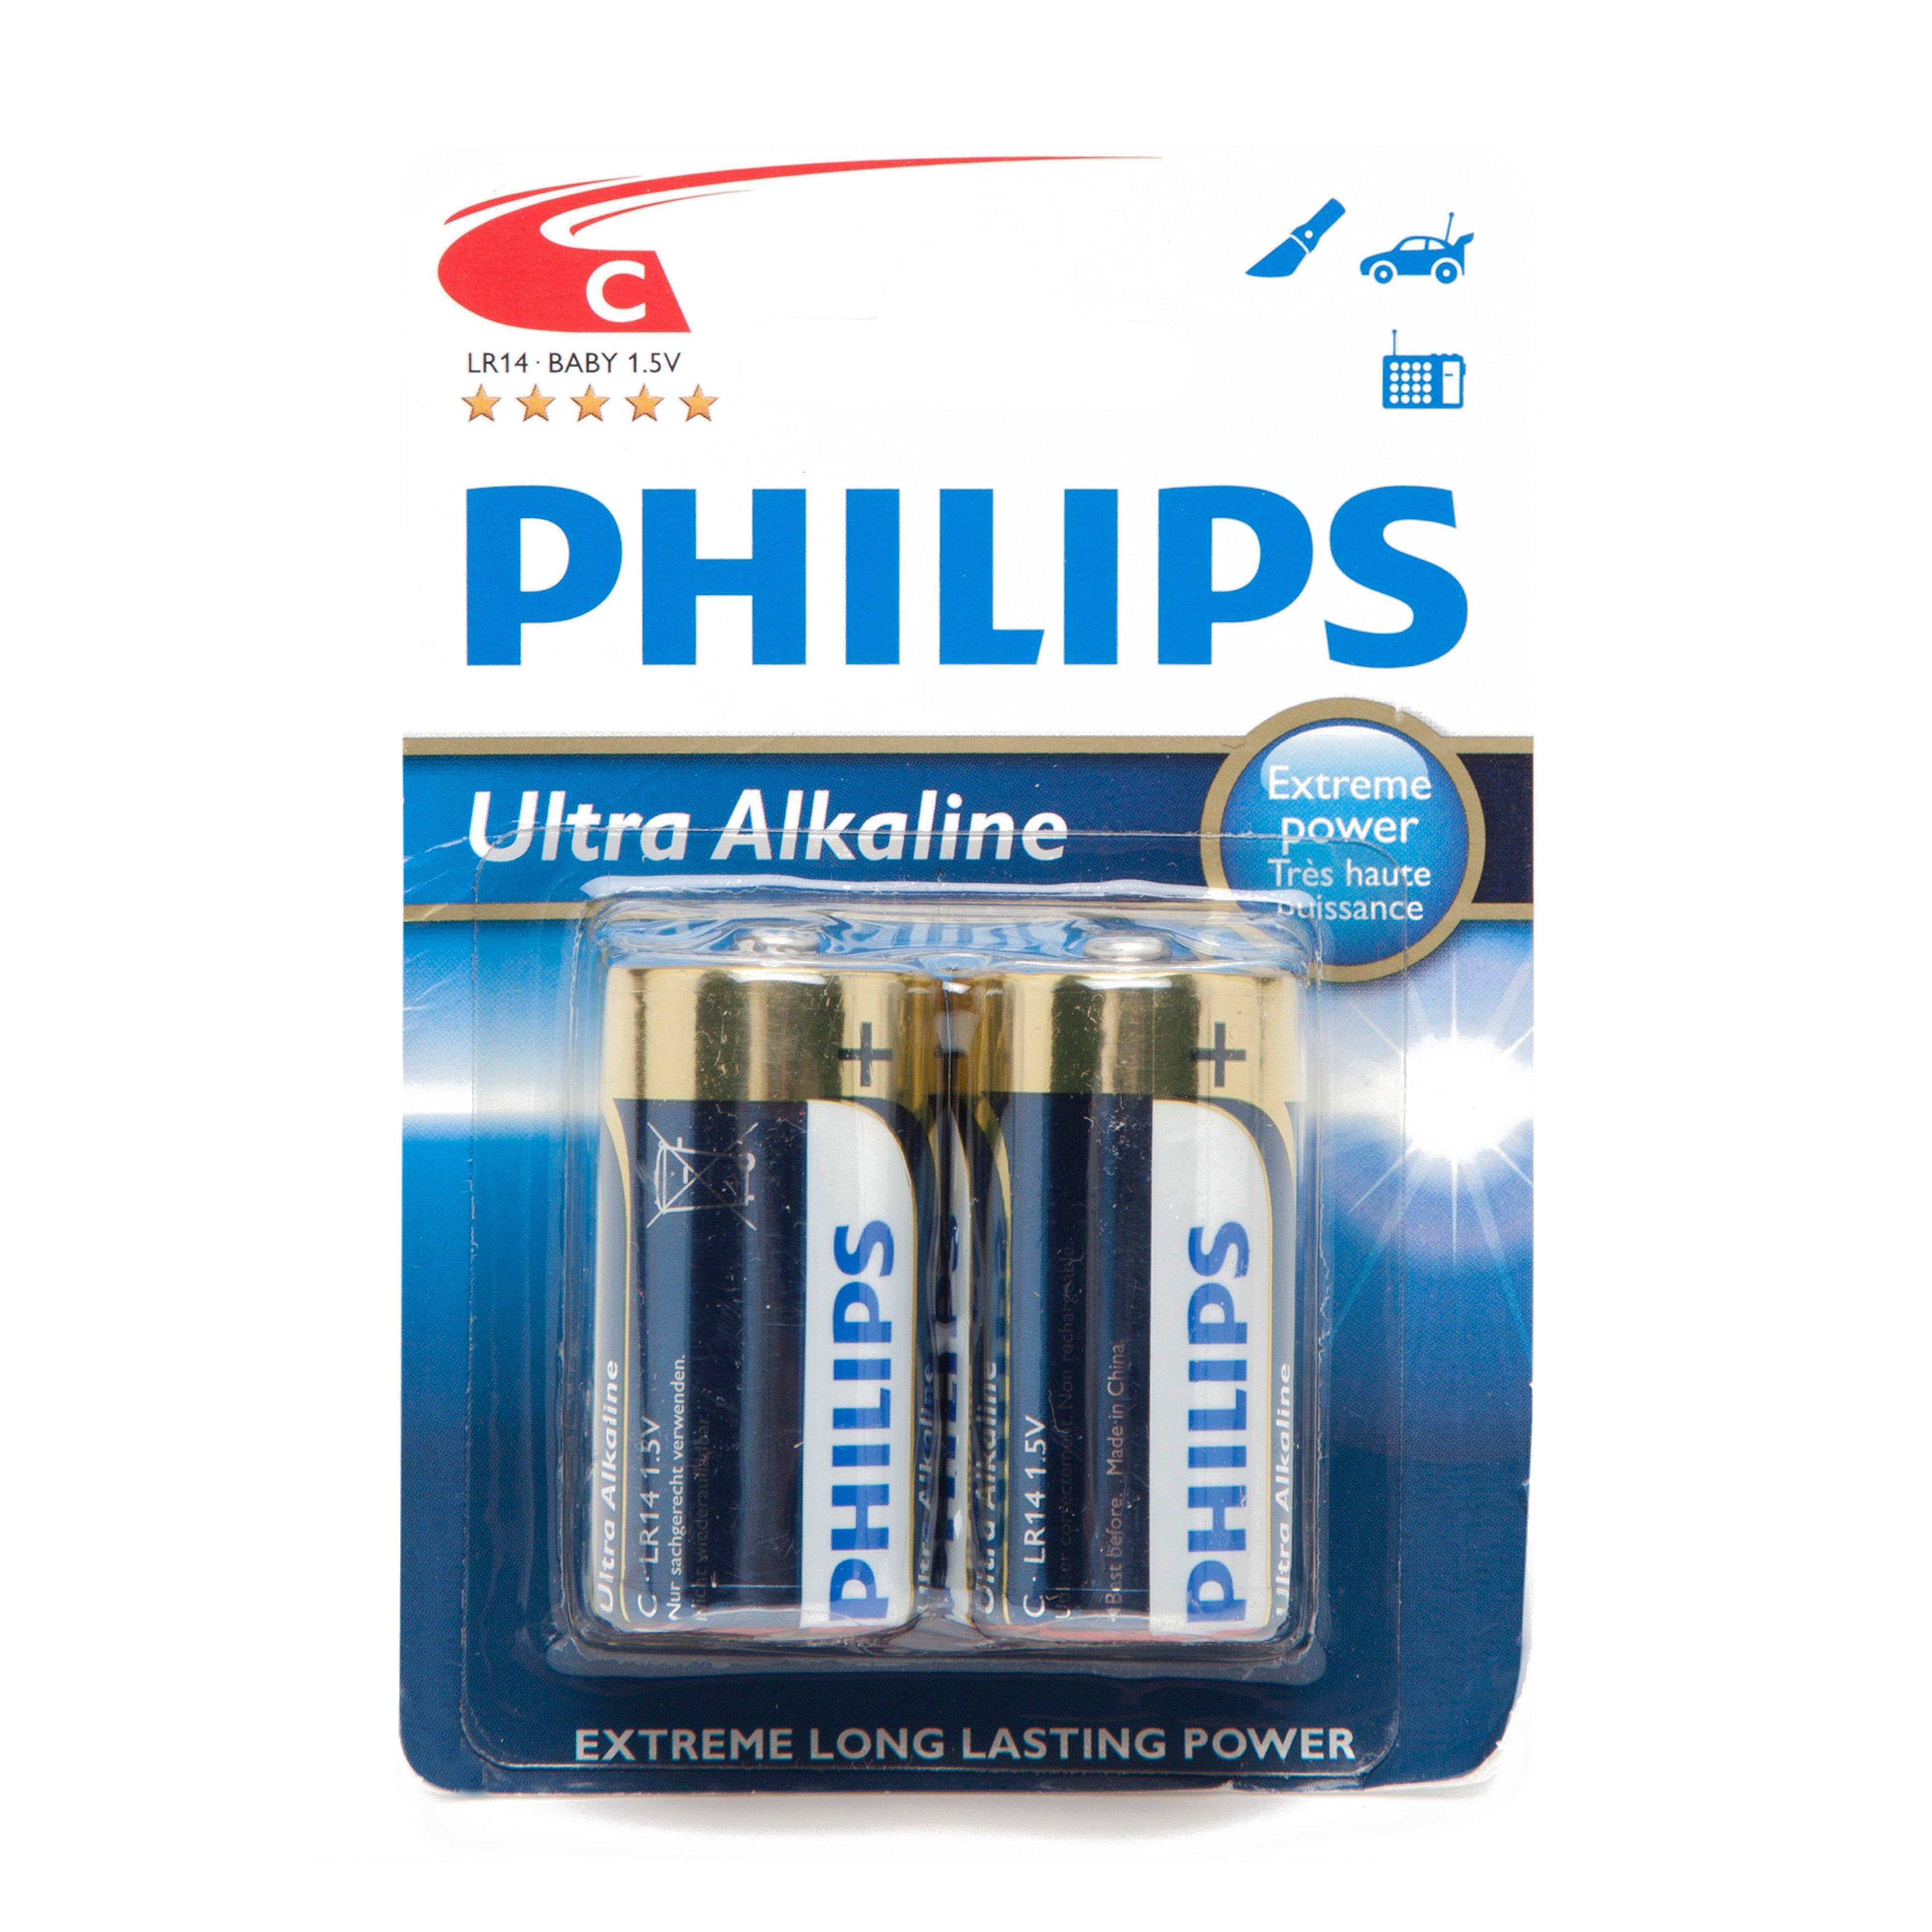 Phillips Ultra Alkaline C Batteries 2 Pack Review